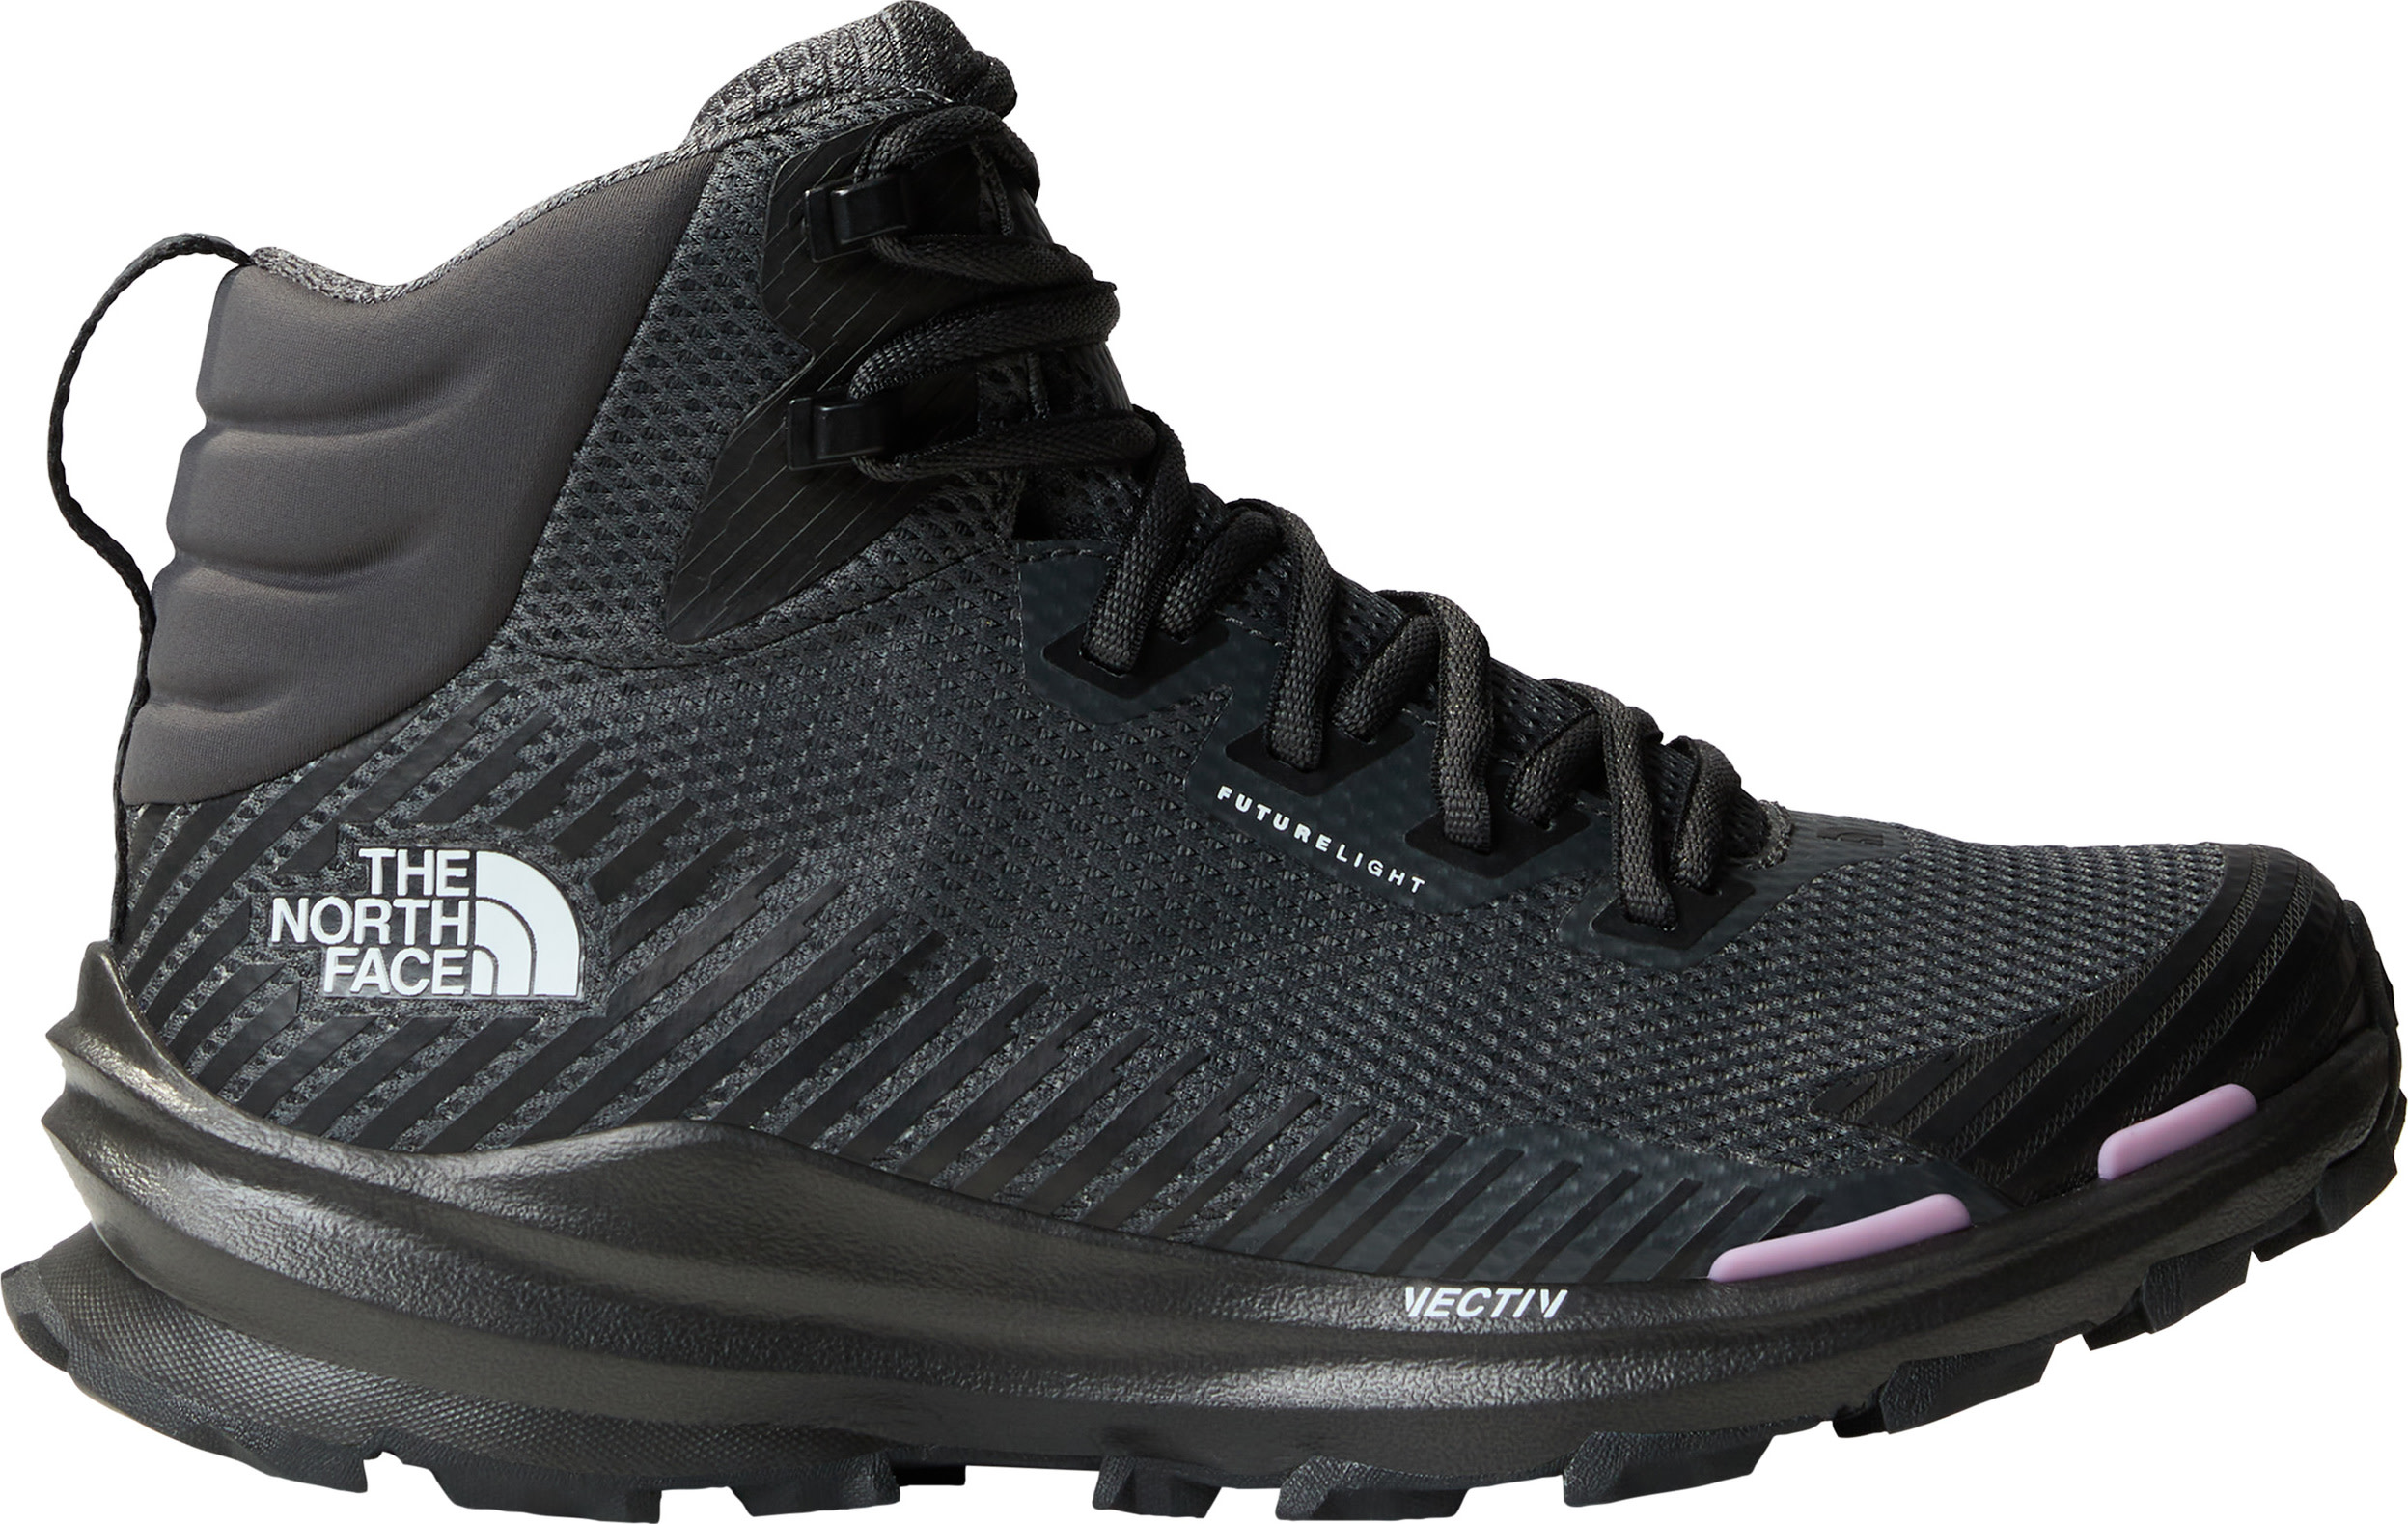 Women’s Vectiv Fastpack Futurelight Hiking Boots Tnf Black/Asphalt Grey